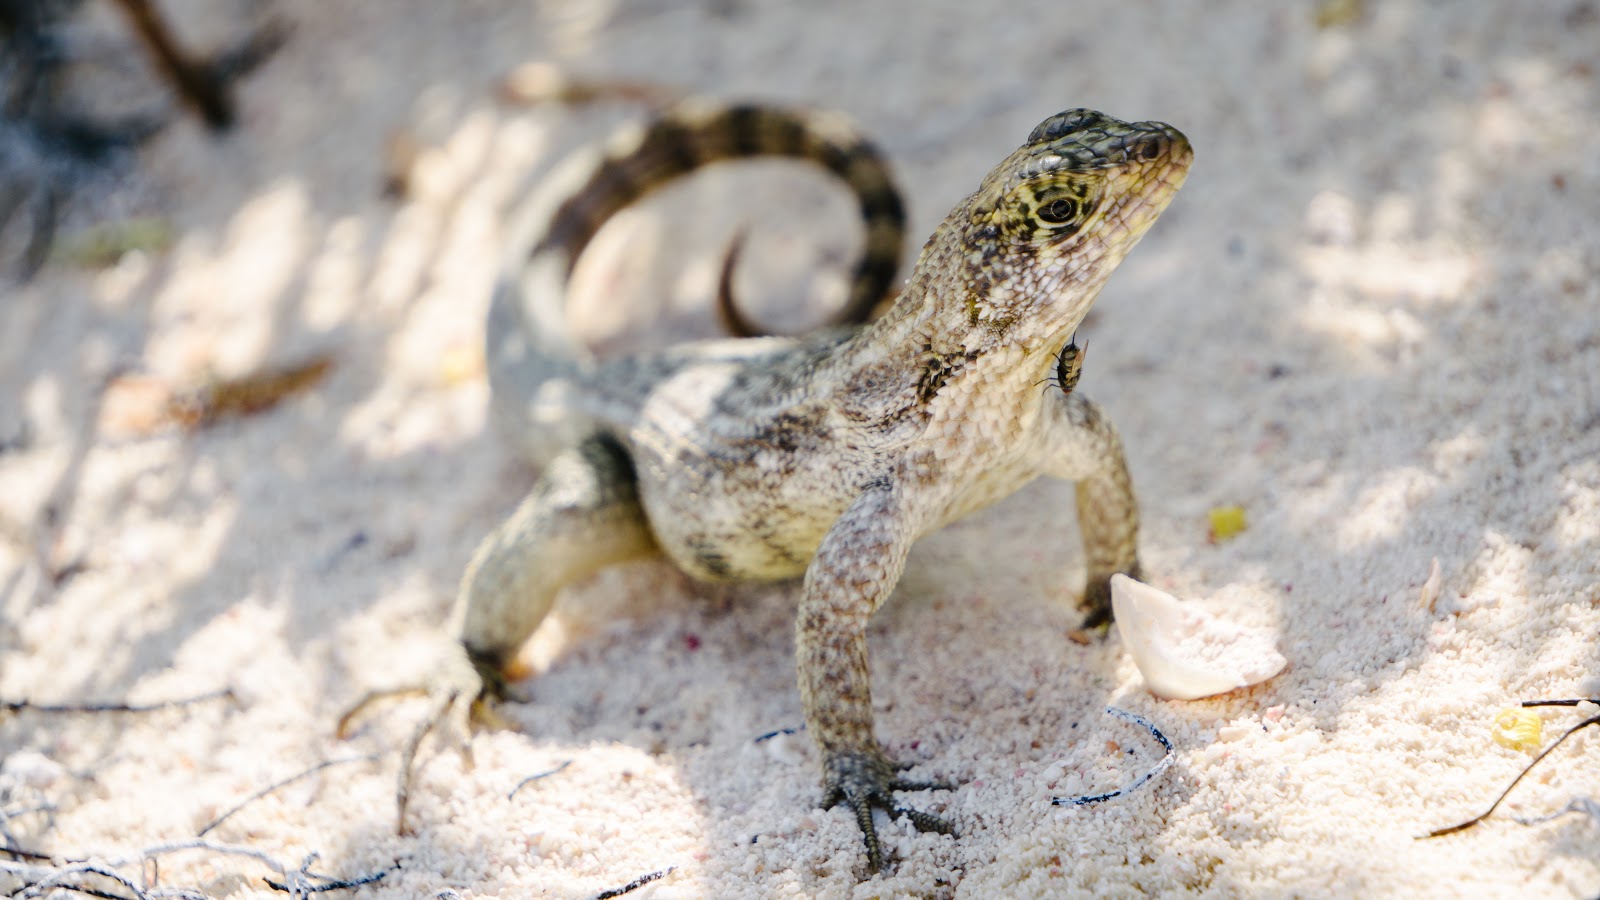 Lizard in the sand